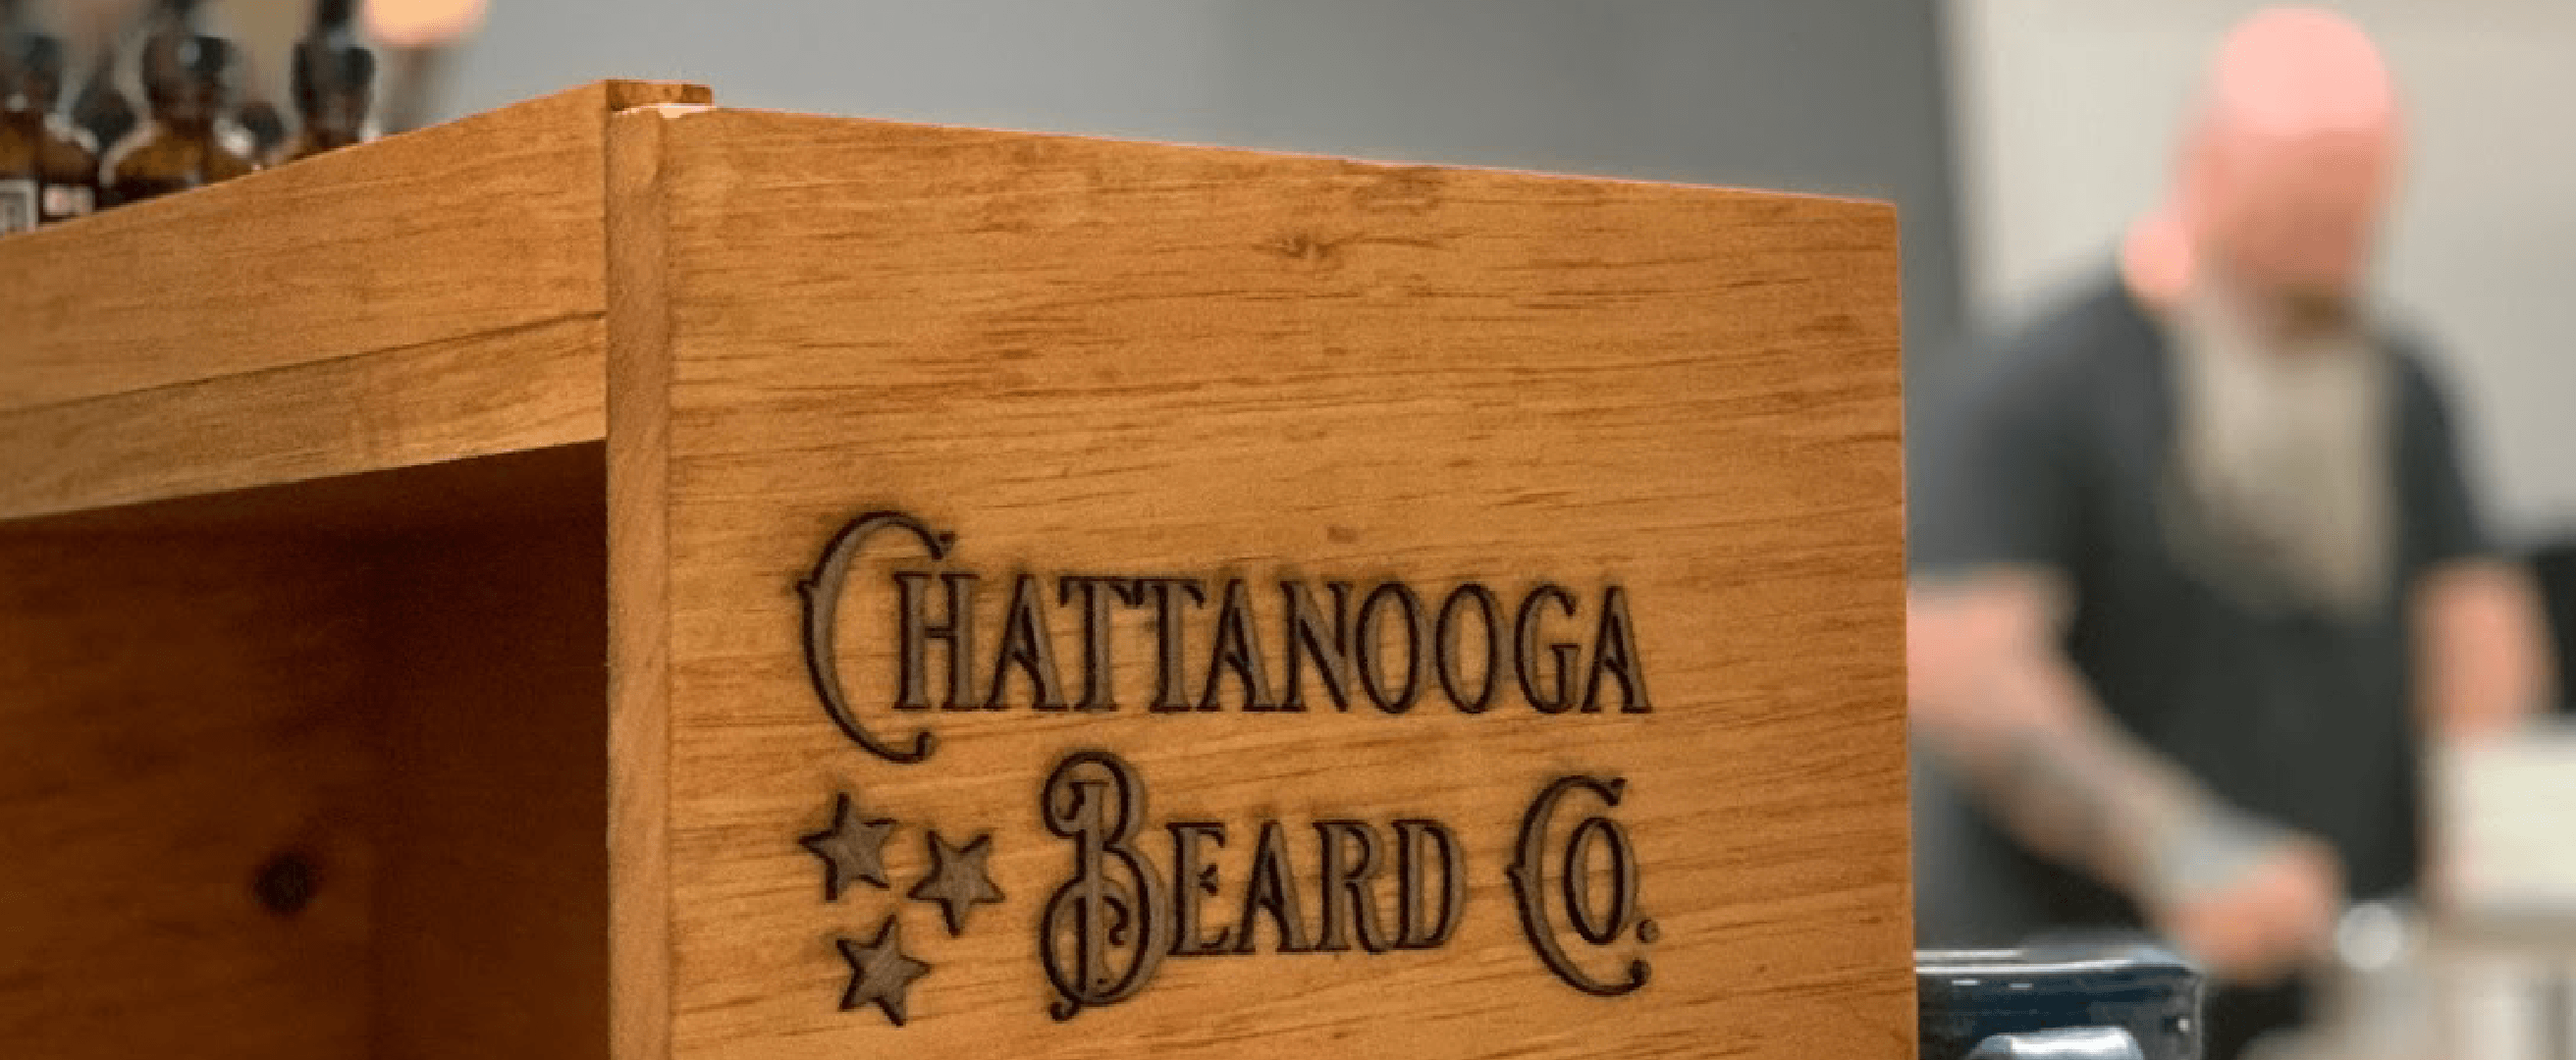 chattanooga beard co. wooden box